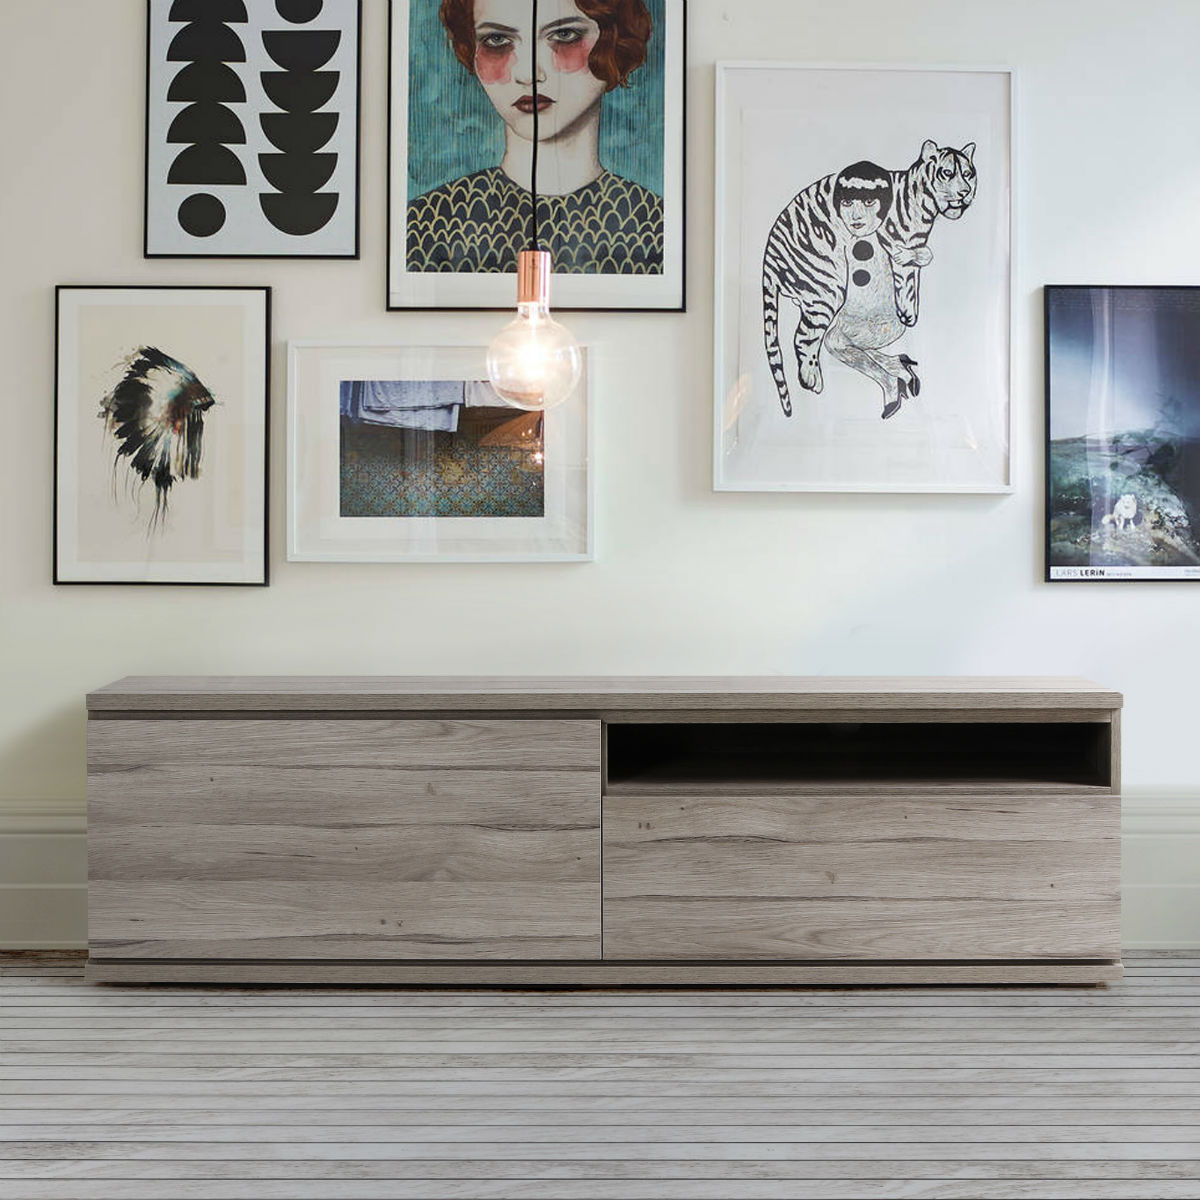 meuble tv 160 cm design tiroirs et niche